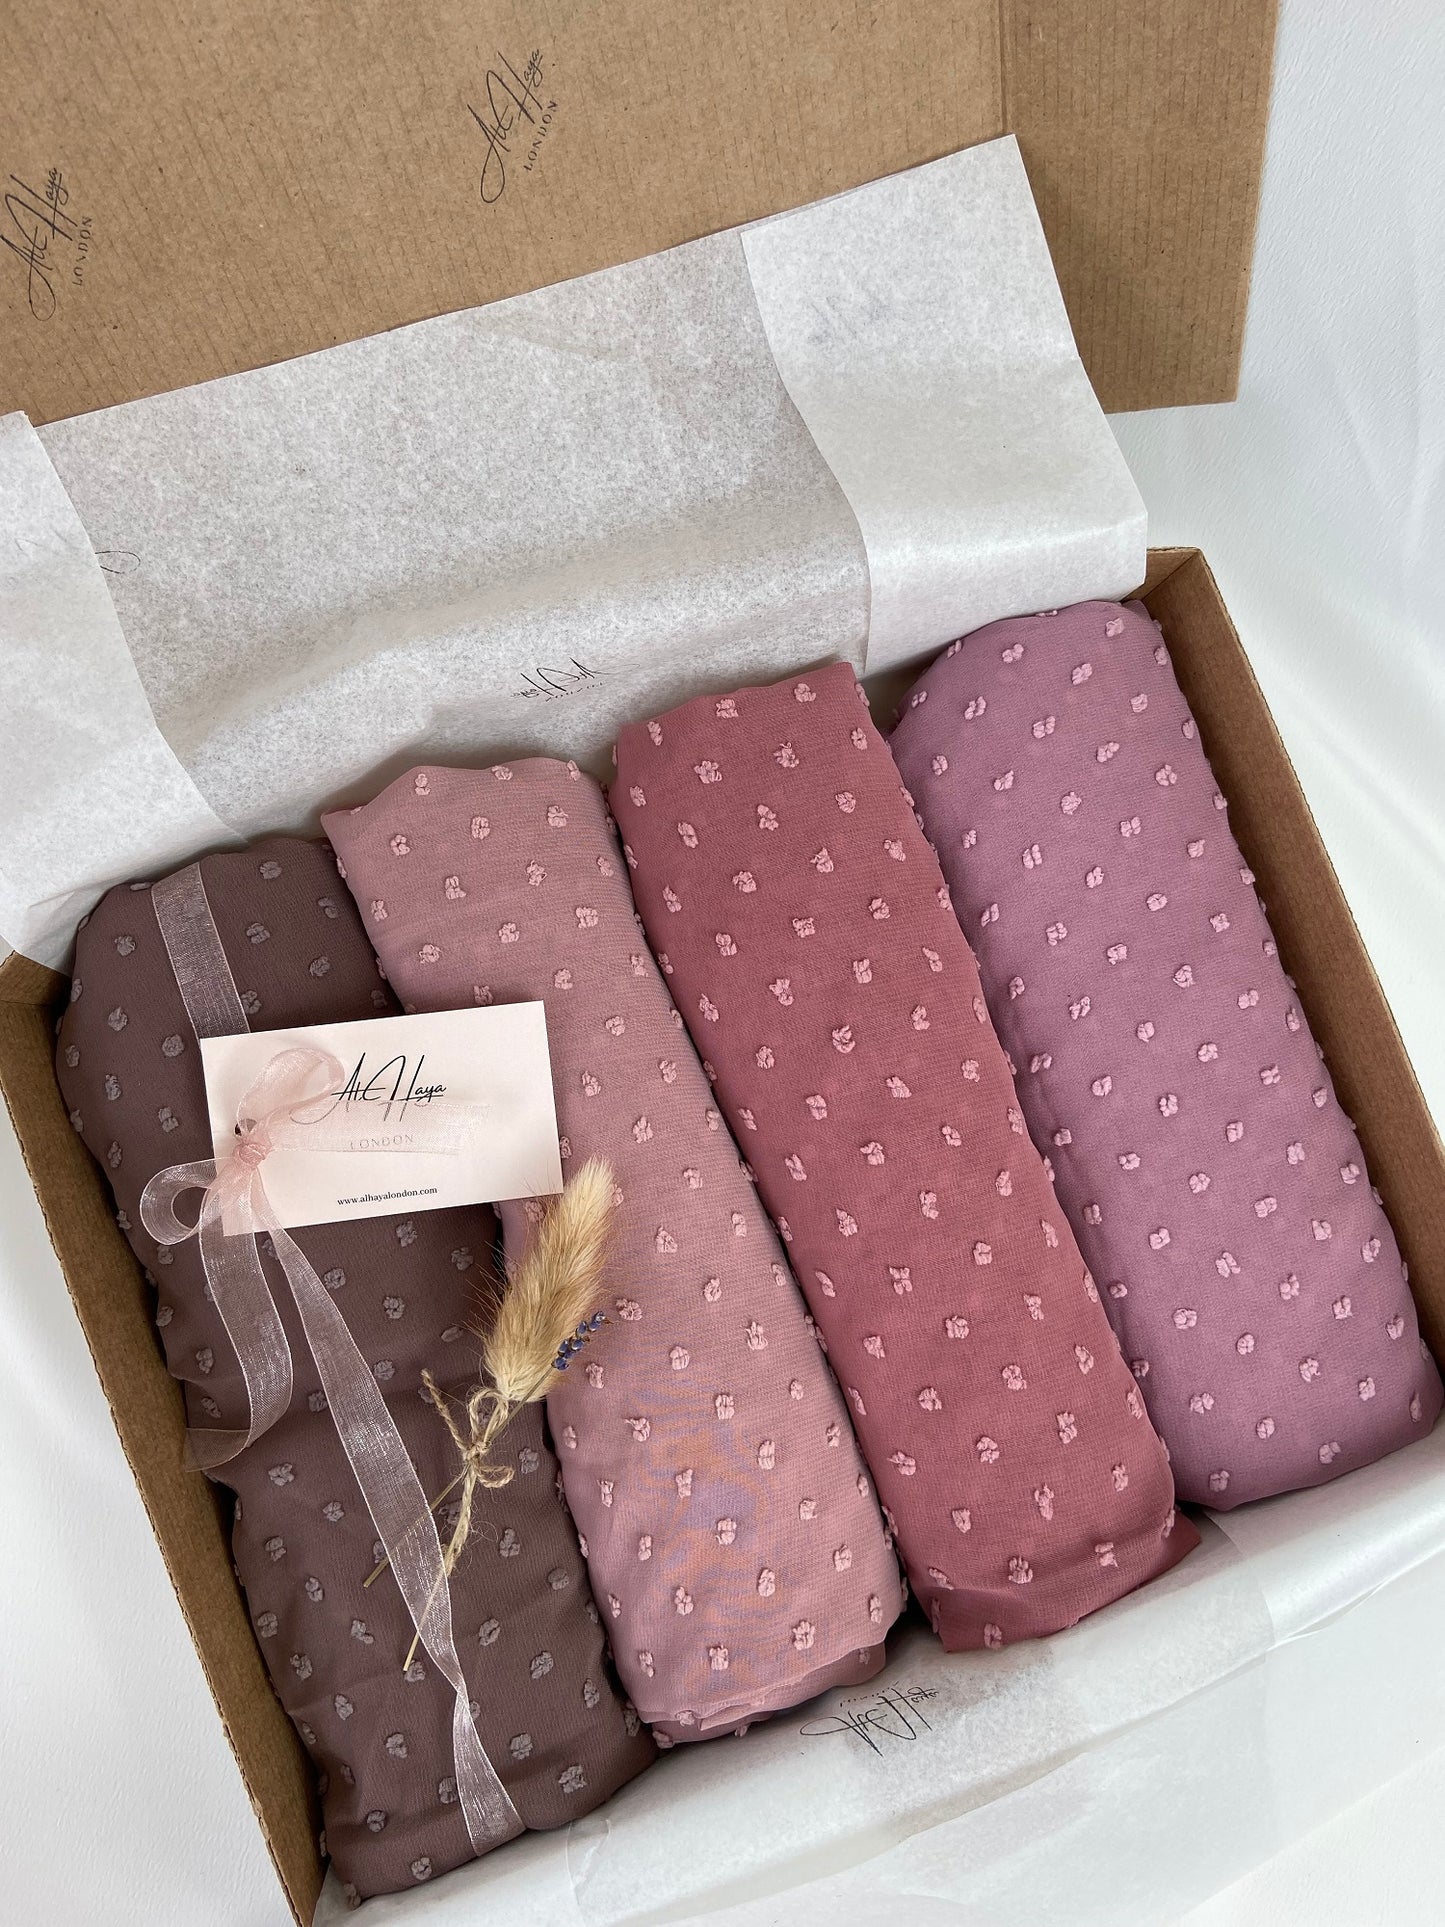 Neutral Pinks Hijab Gift Box